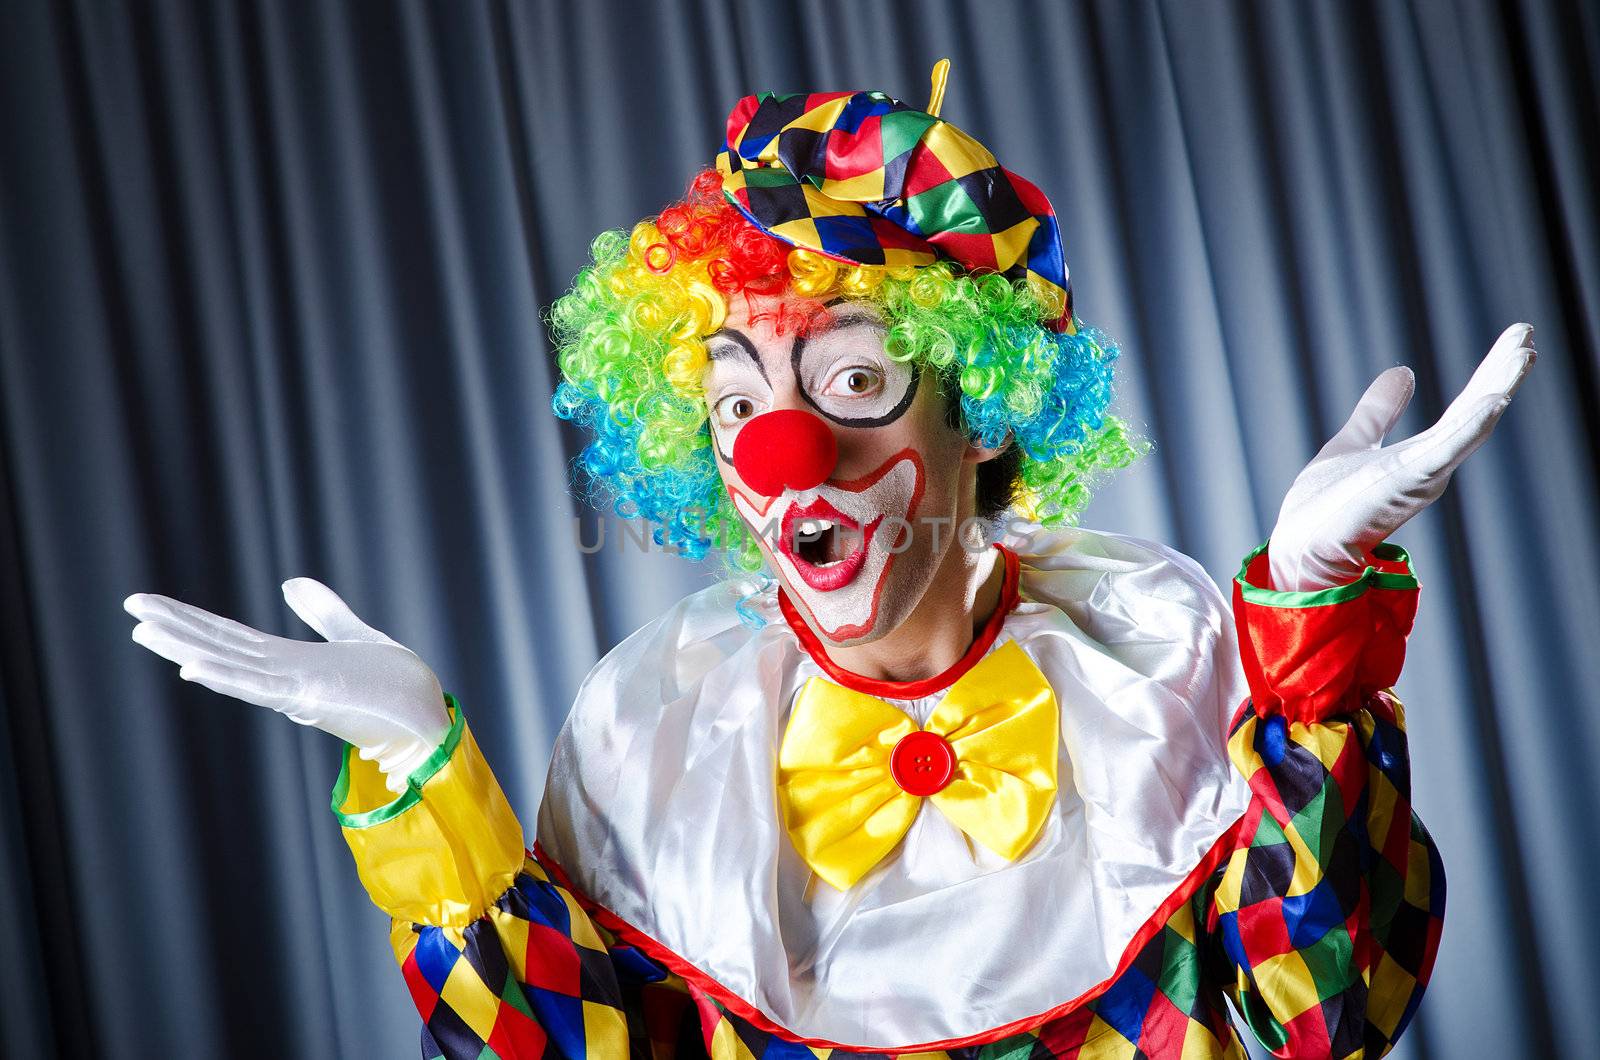 Funny clown in studio shooting by Elnur